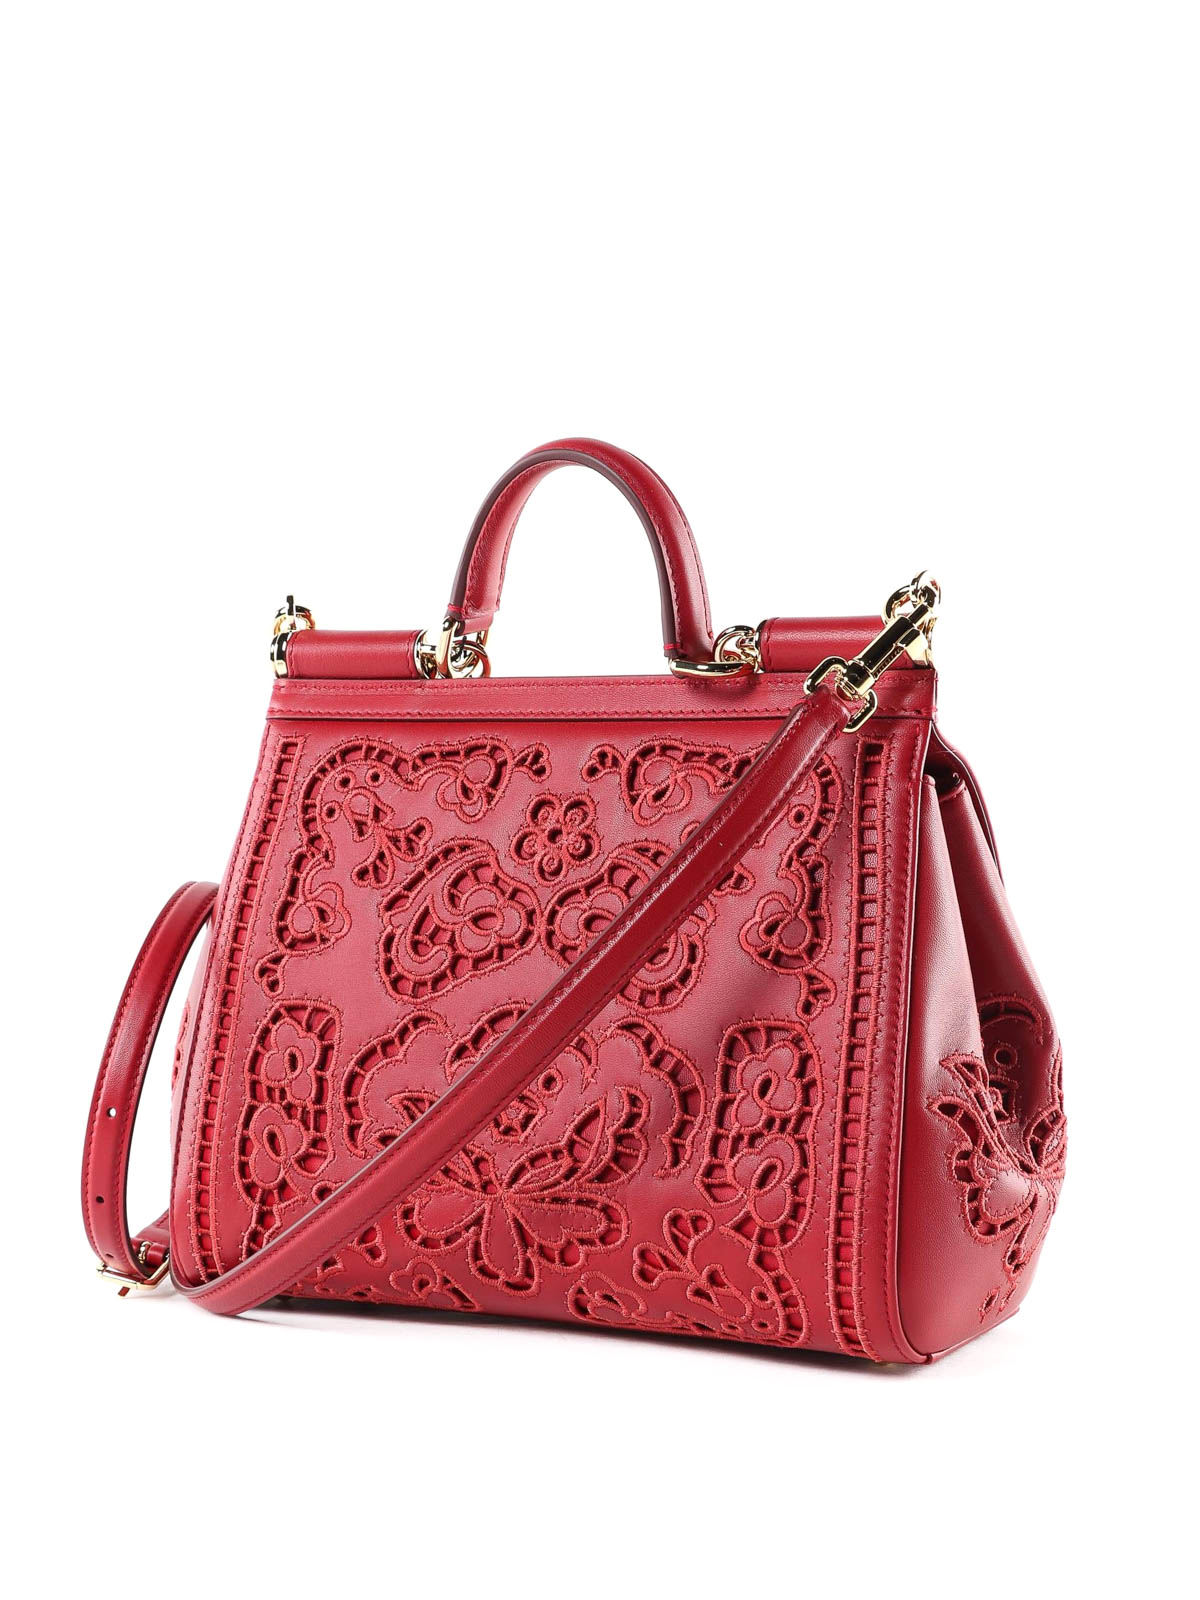 Dolce & Gabbana Medium D&g Sicily Bag in Red